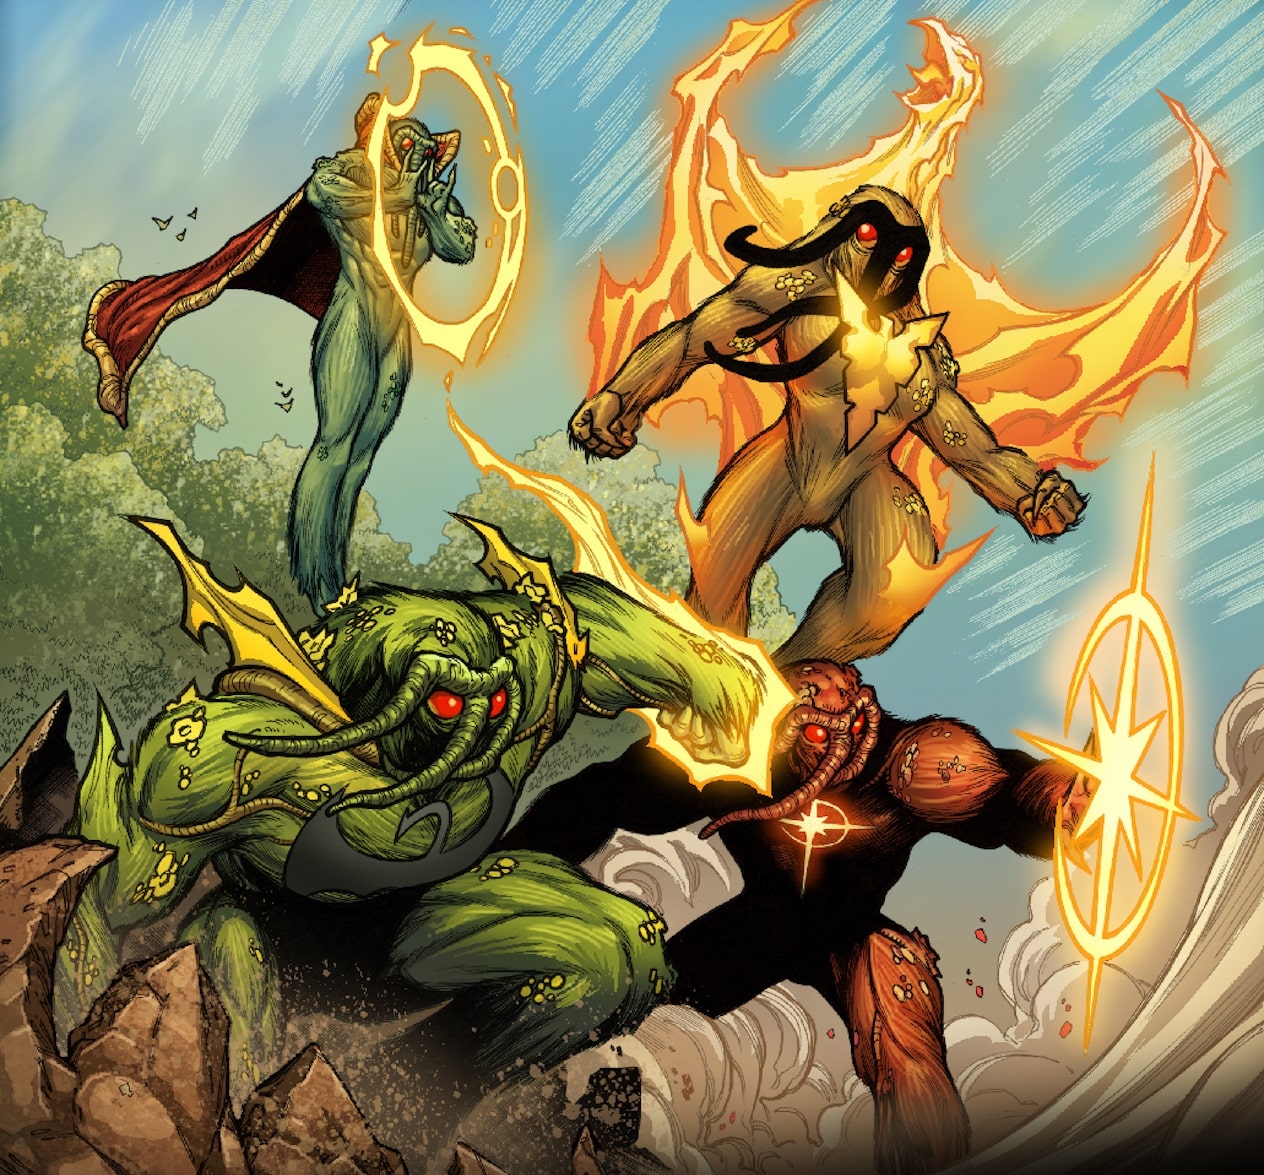 Marvel teases Man-Thing Avengers for April 27th